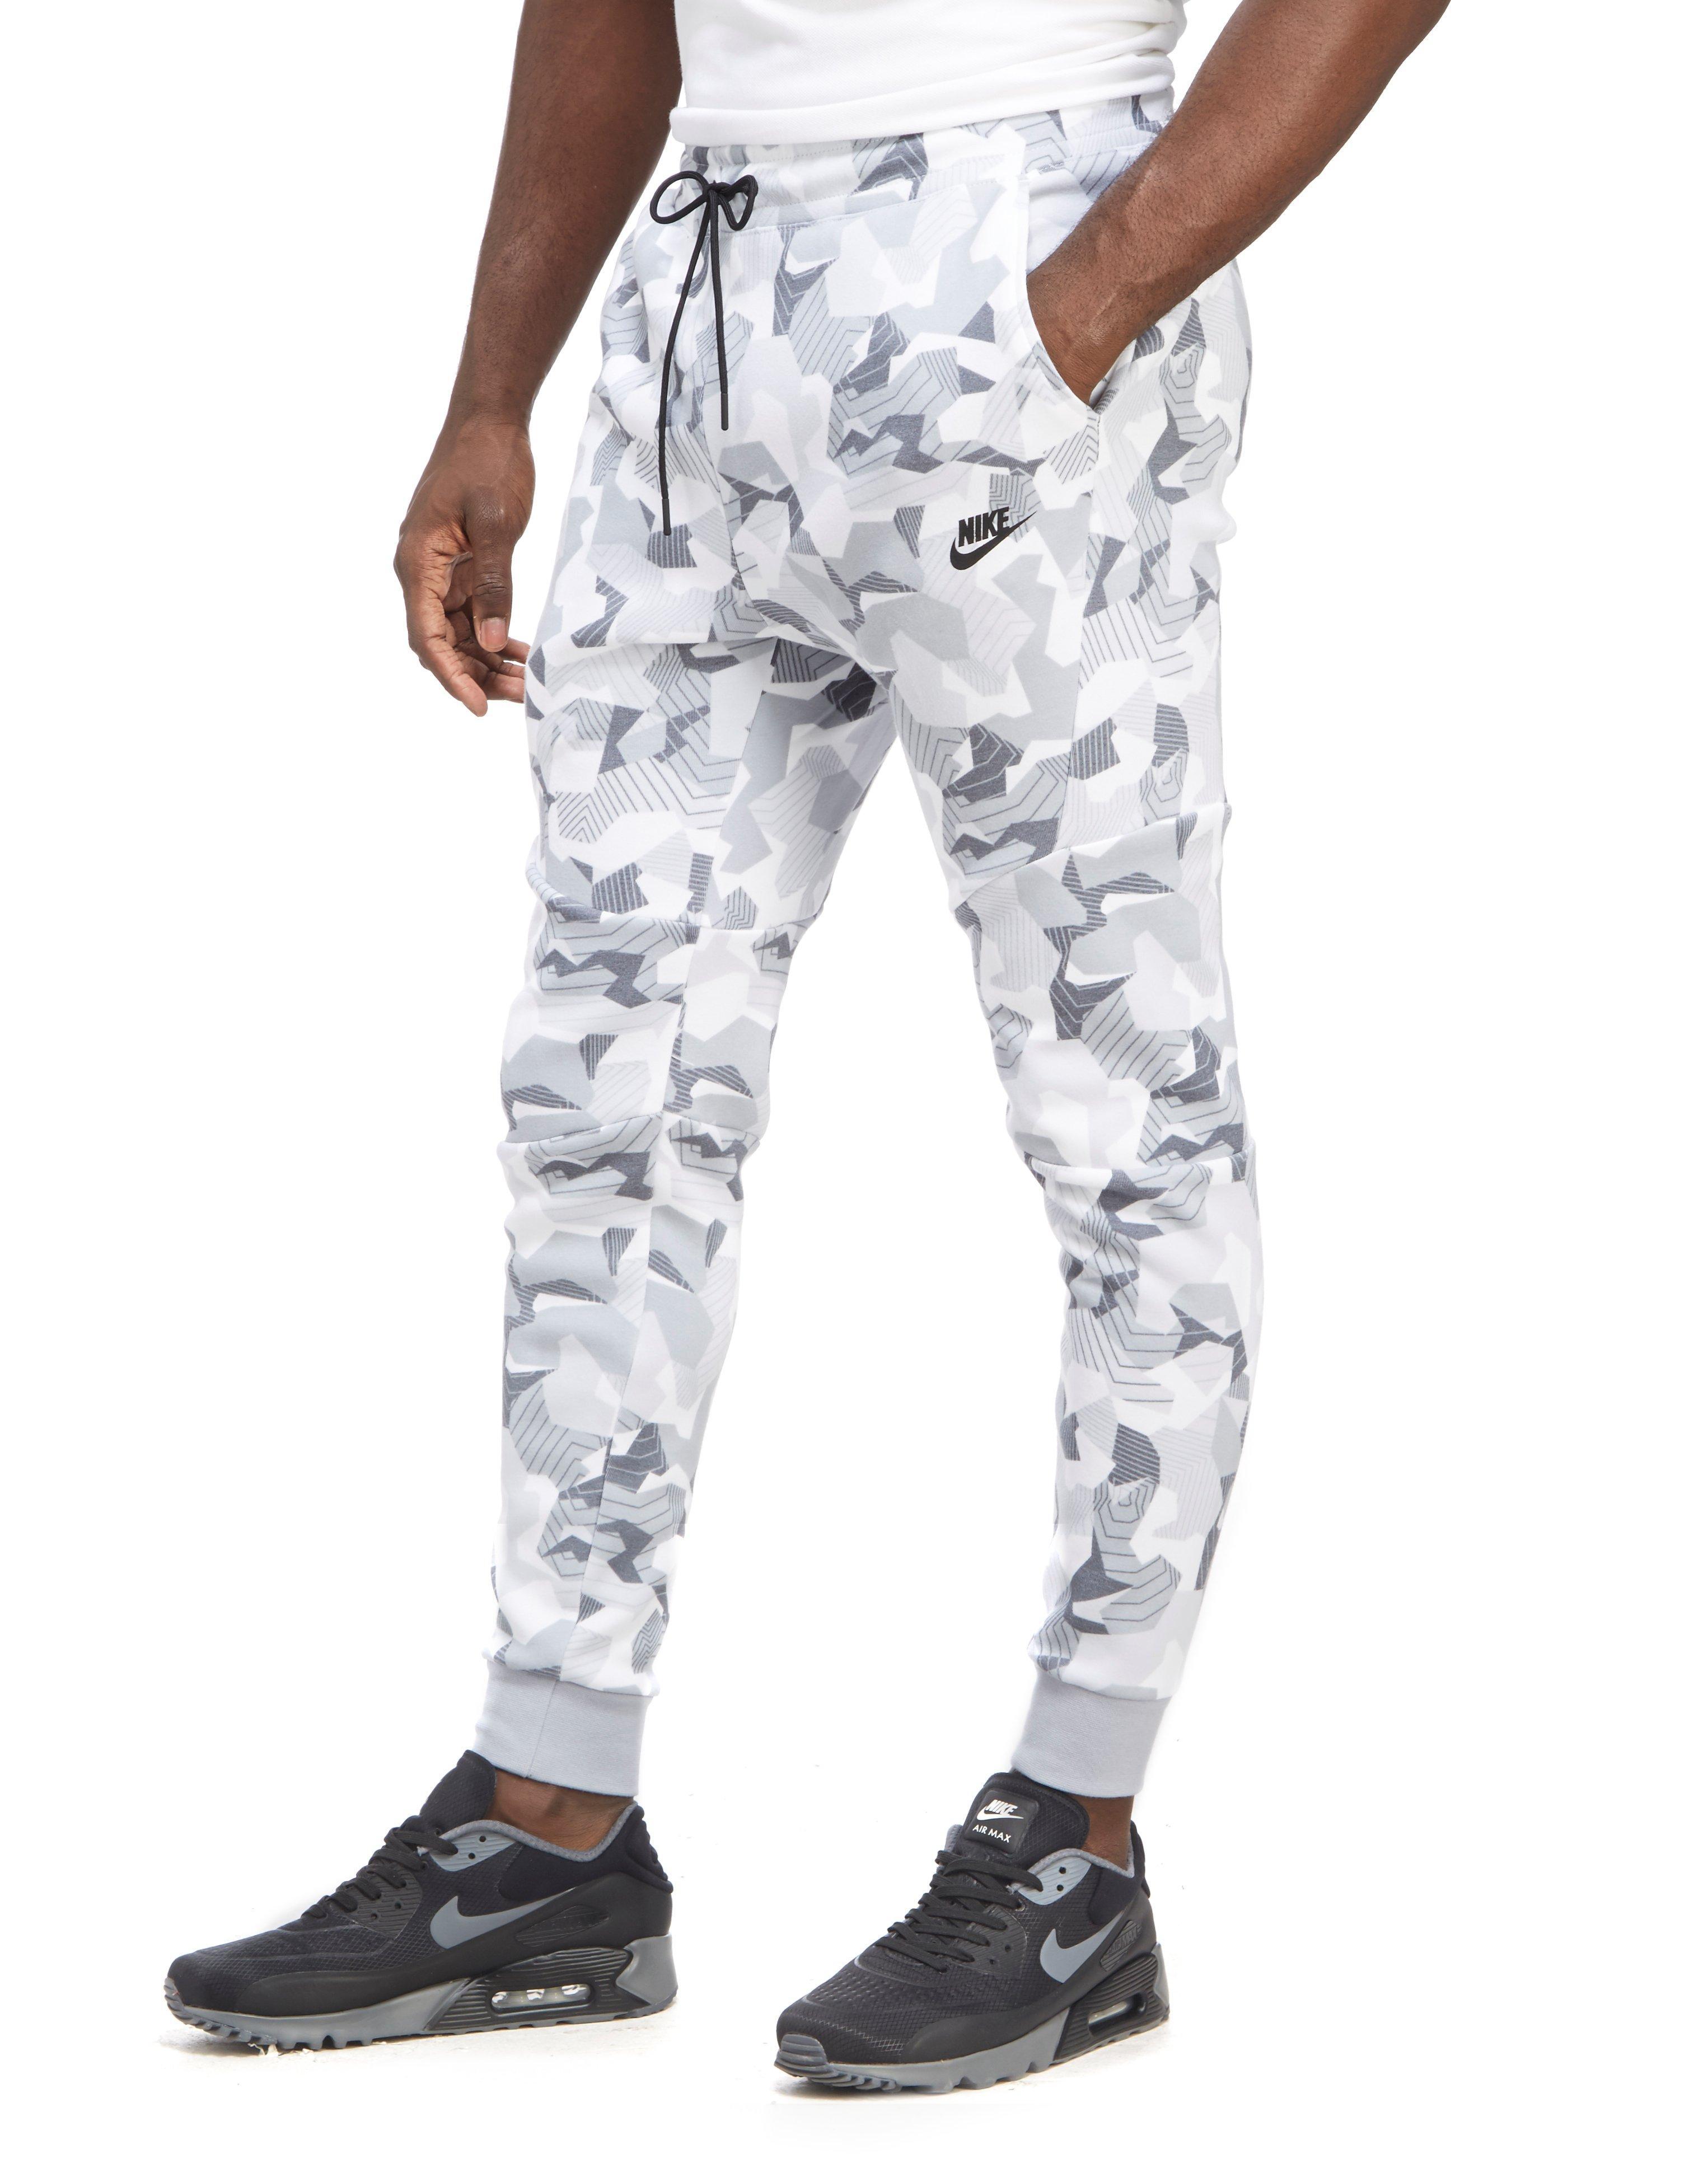 Nike Tech Fleece Camouflage Pants in White/Black (White) for Men - Lyst